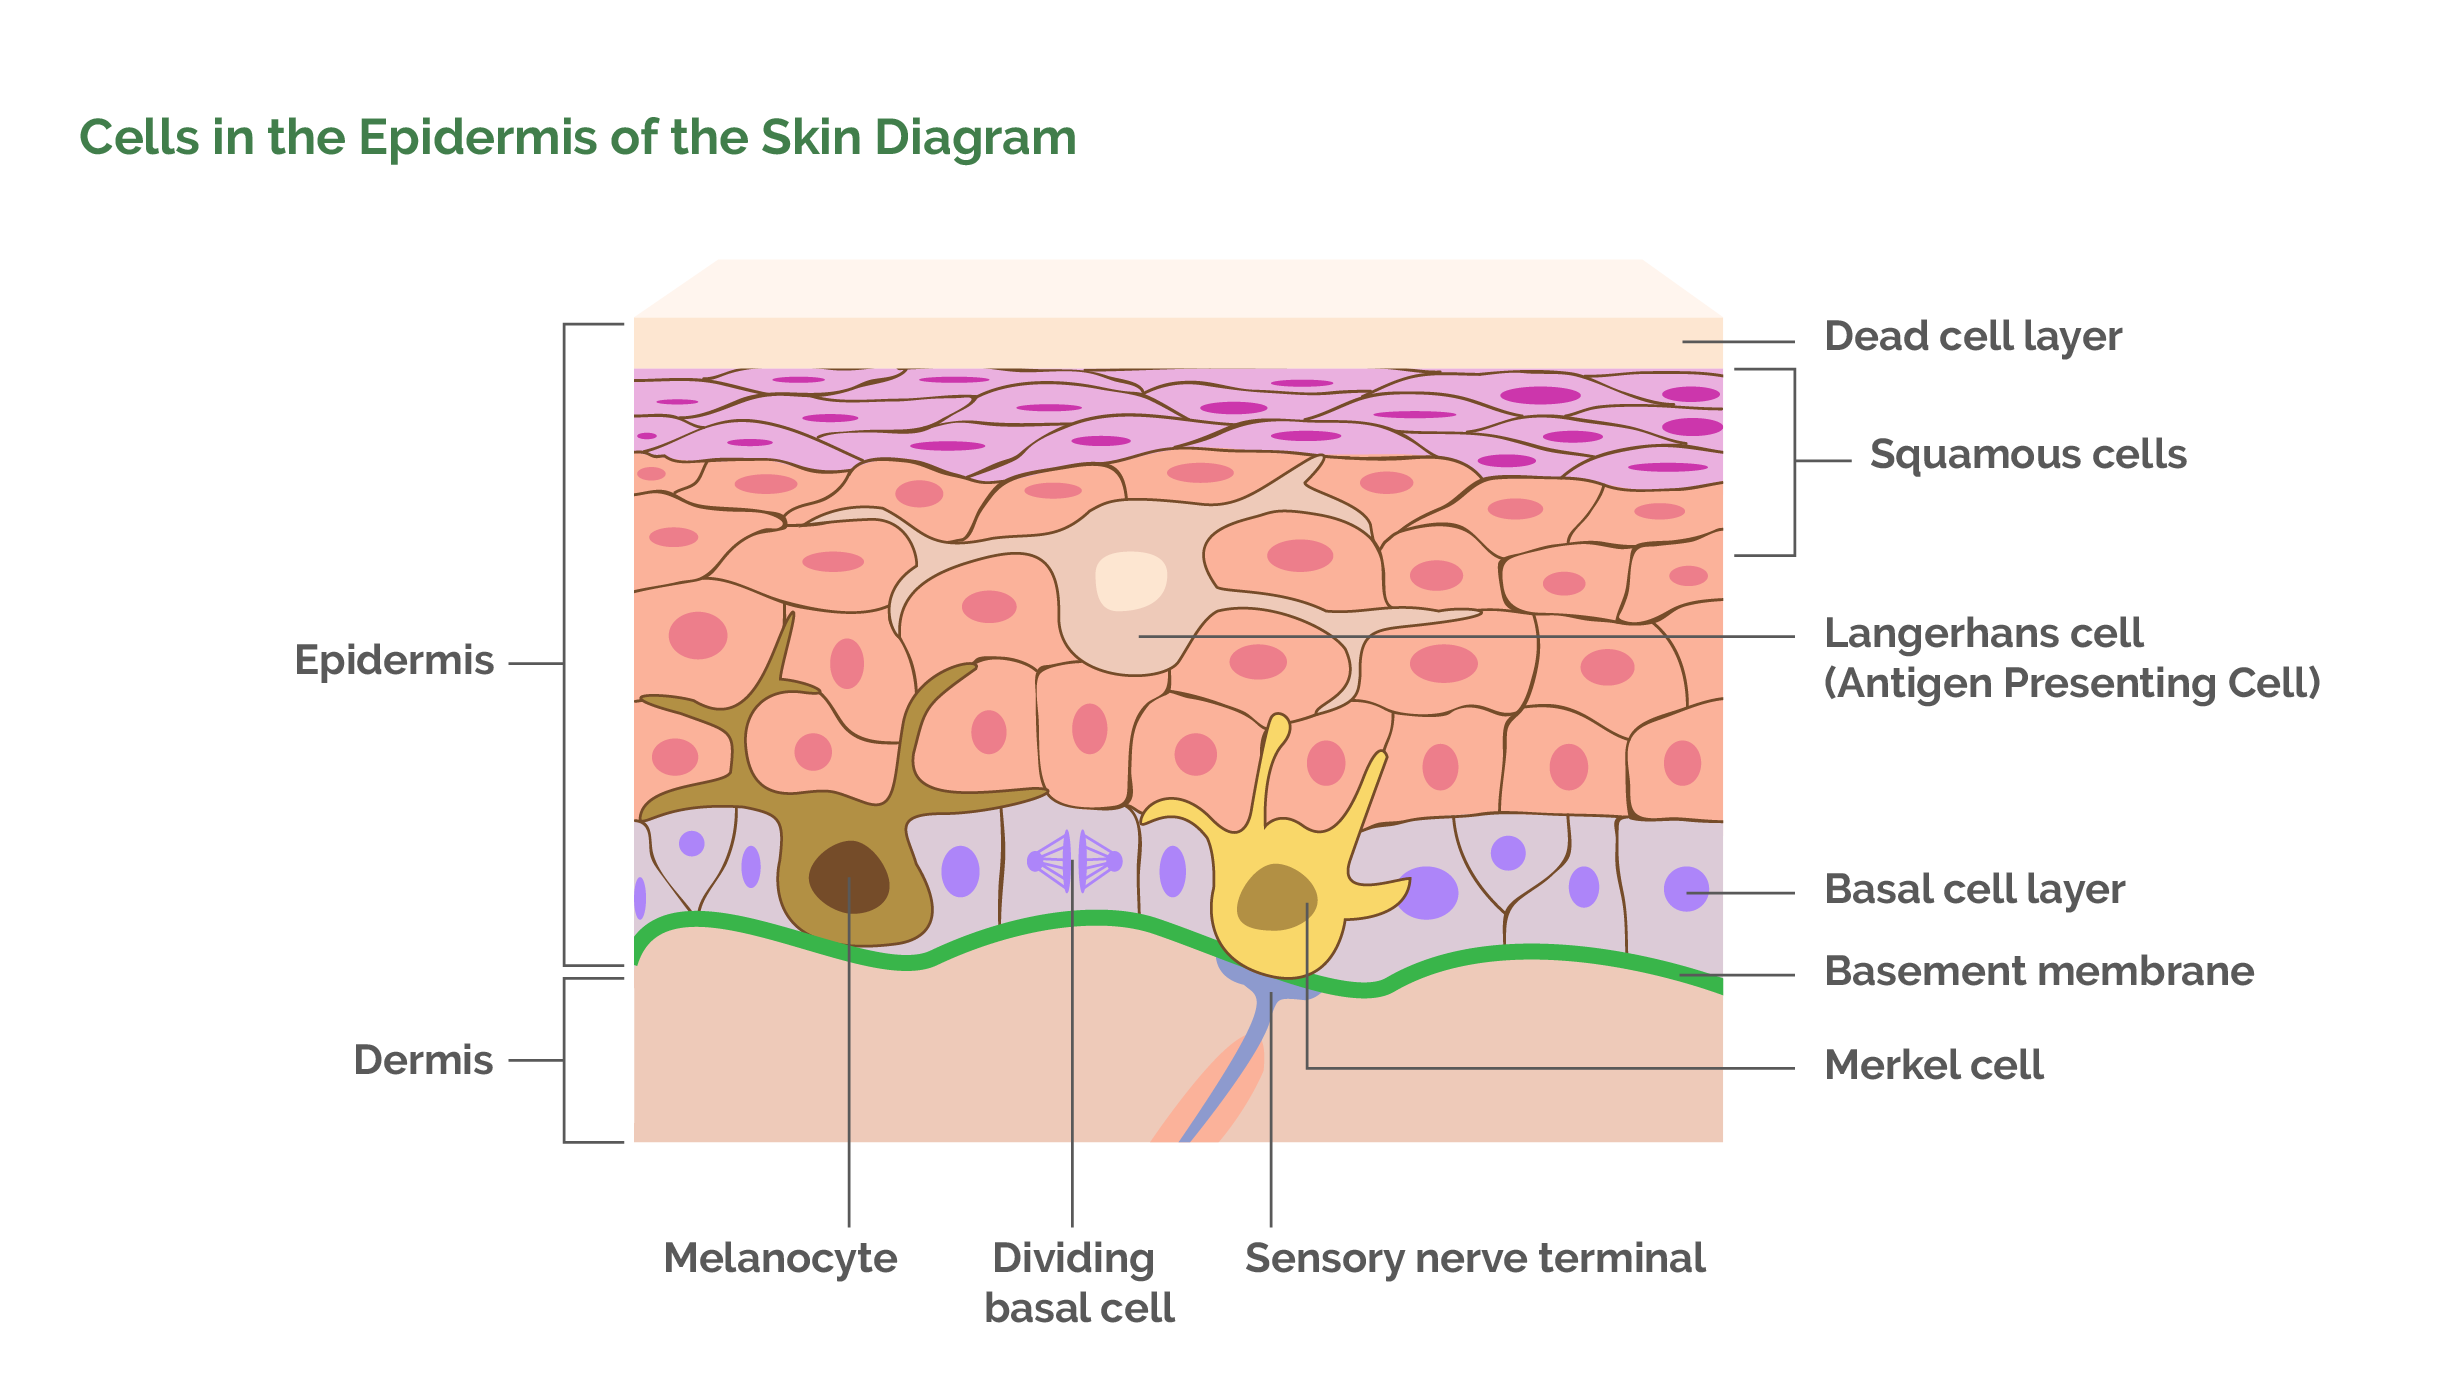 Cells in the Epidermis of the Skin Diagram